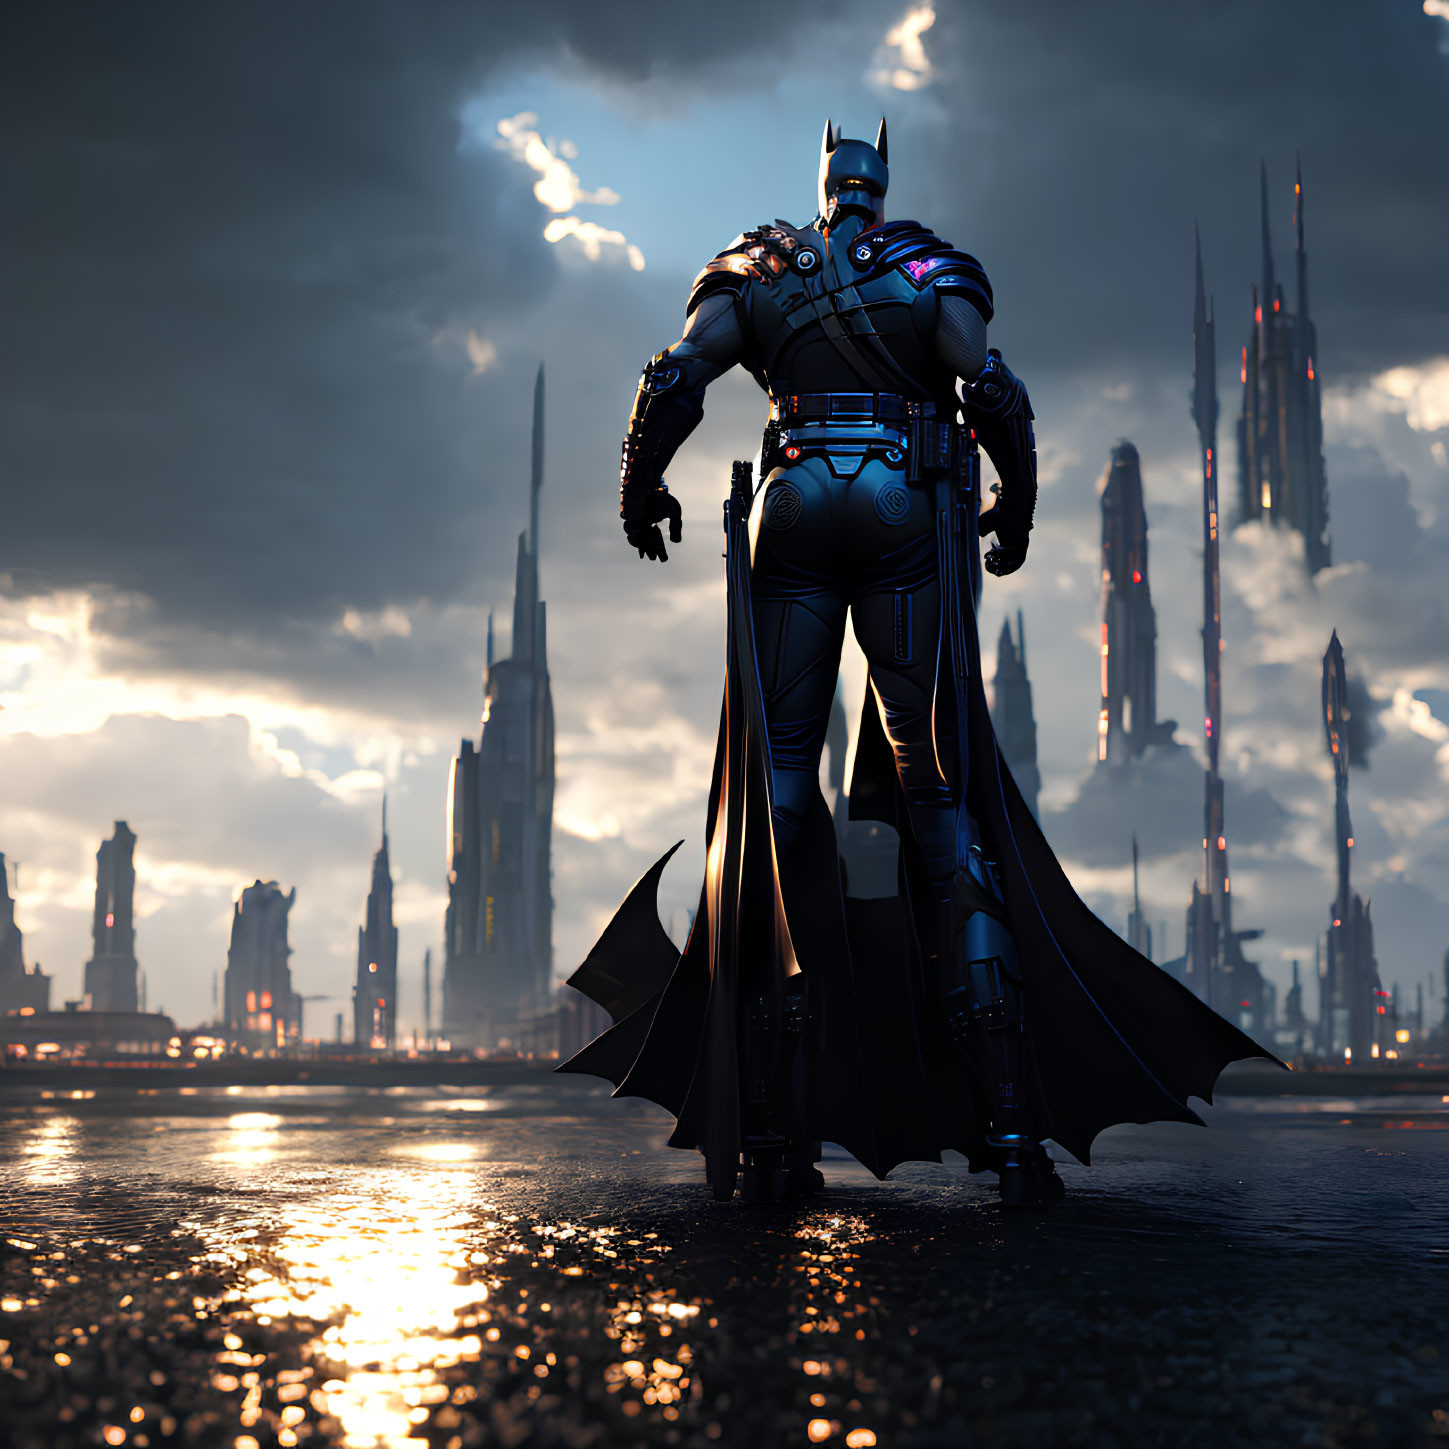 Person in Batman costume gazes at futuristic city skyline at dusk.